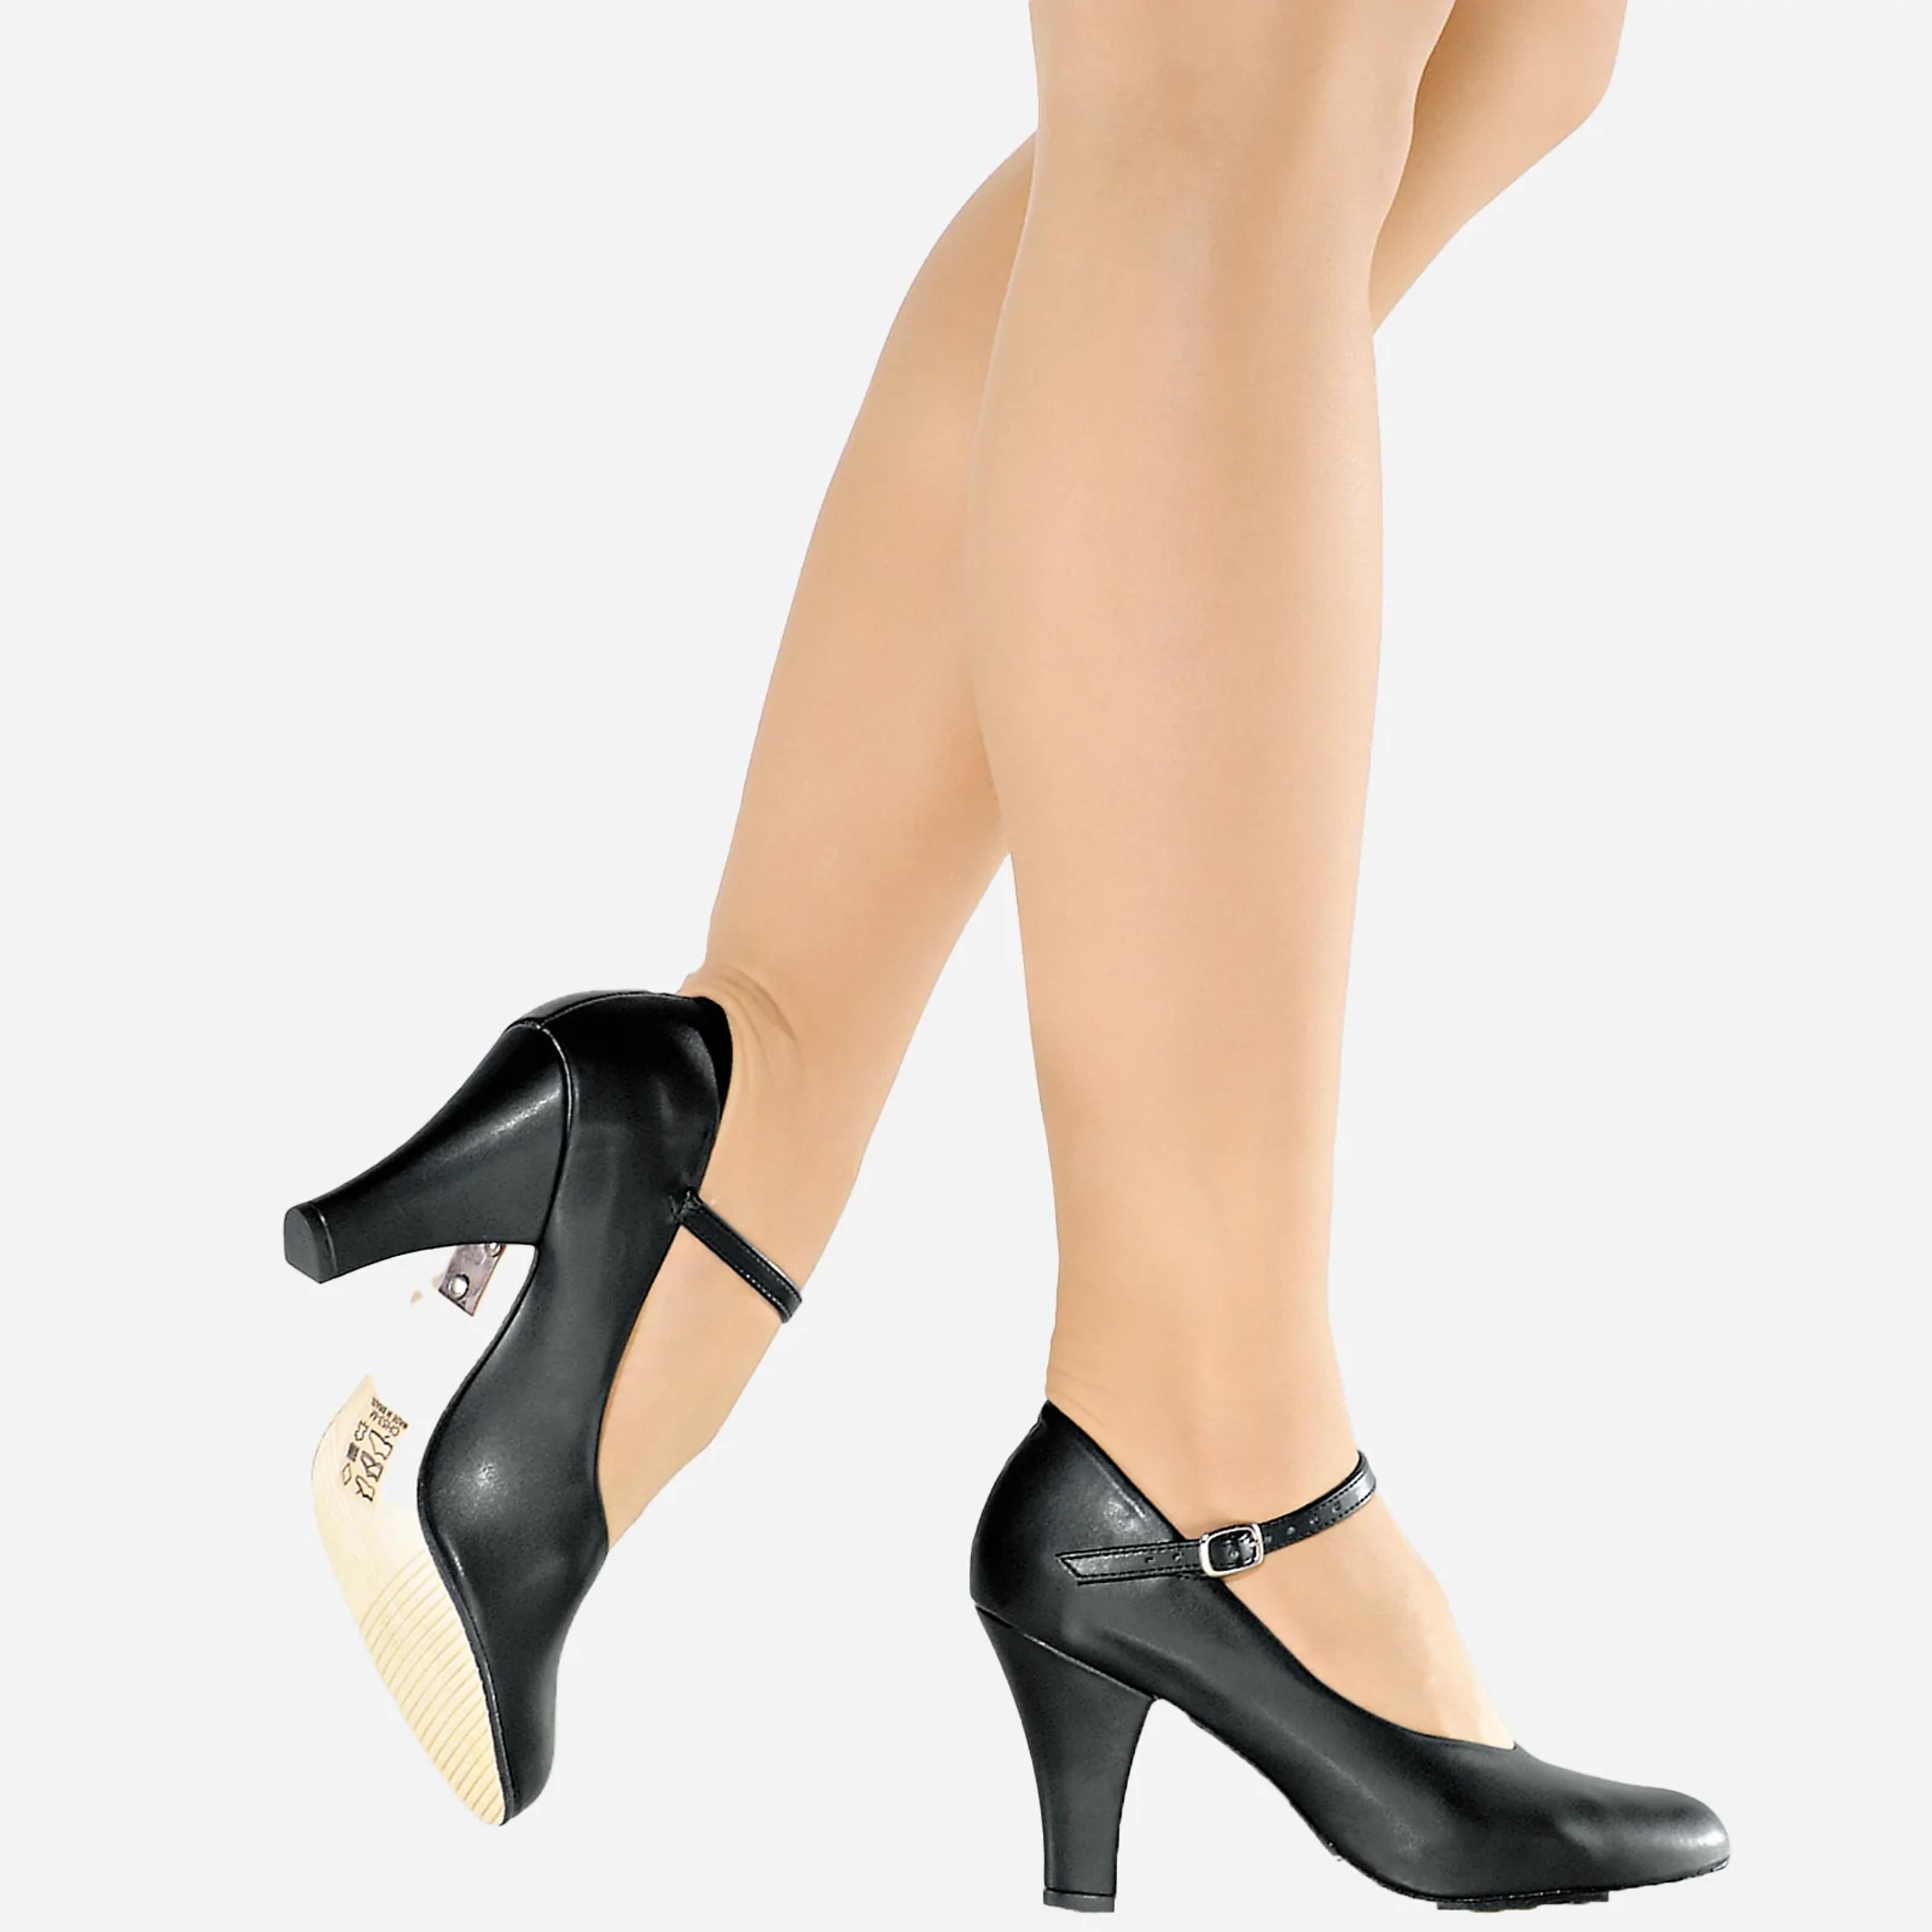 Steve Madden 2 inch High heel open toe shoes size 11 Black | eBay-donghotantheky.vn